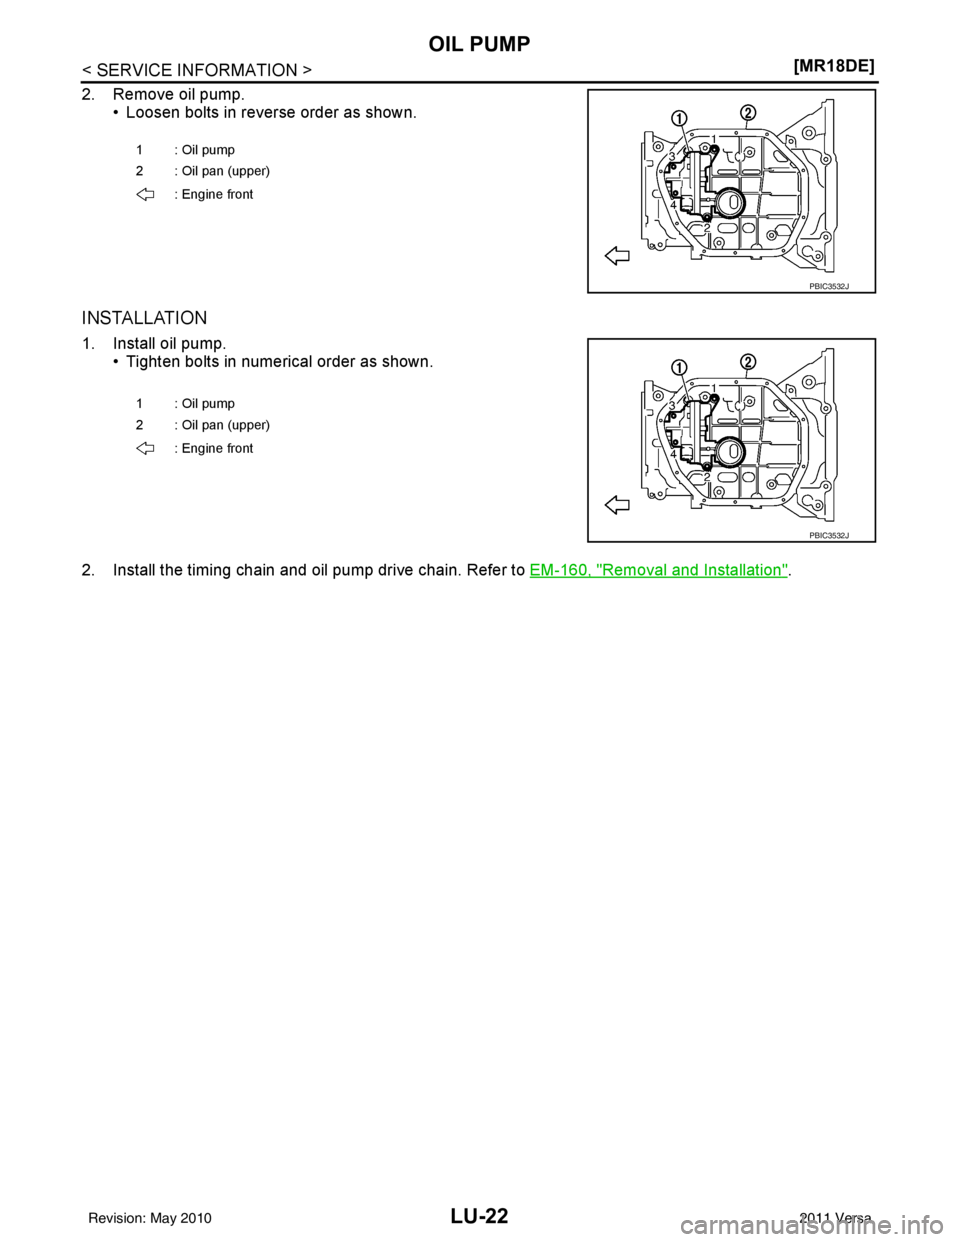 NISSAN LATIO 2011  Service Repair Manual LU-22
< SERVICE INFORMATION >[MR18DE]
OIL PUMP
2. Remove oil pump.
• Loosen bolts in reverse order as shown.
INSTALLATION
1. Install oil pump. • Tighten bolts in numerical order as shown.
2. Insta